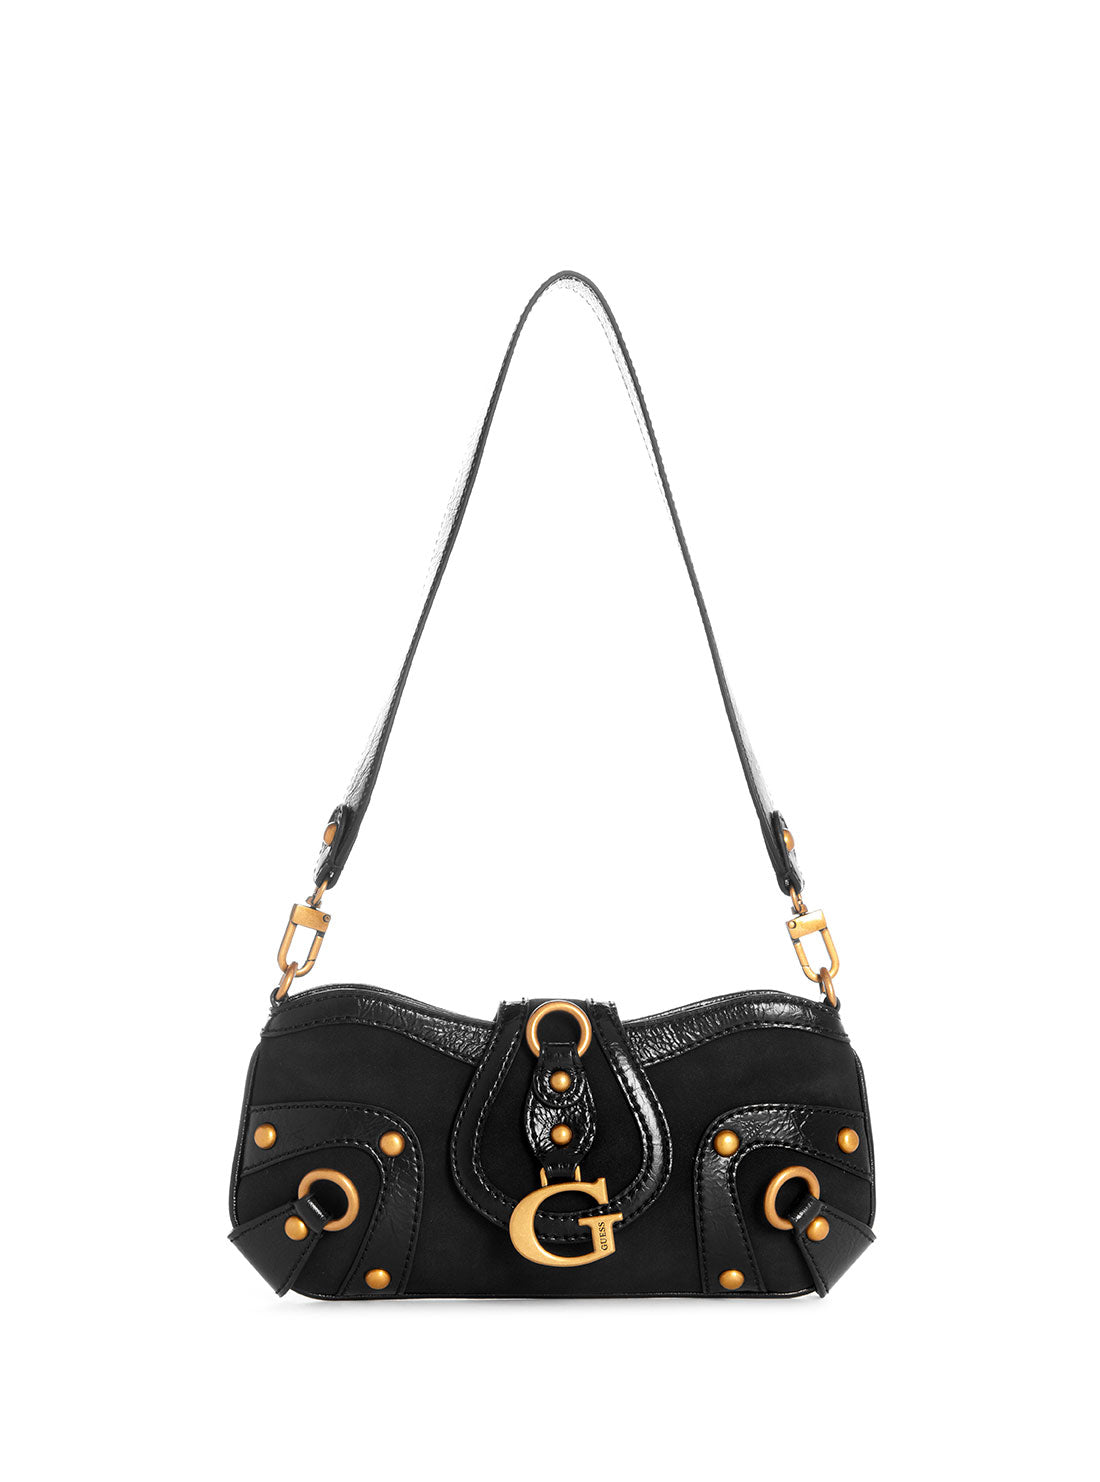 GUESS Women's Black Gloss Vintage Shoulder Bag EB899718 Front View